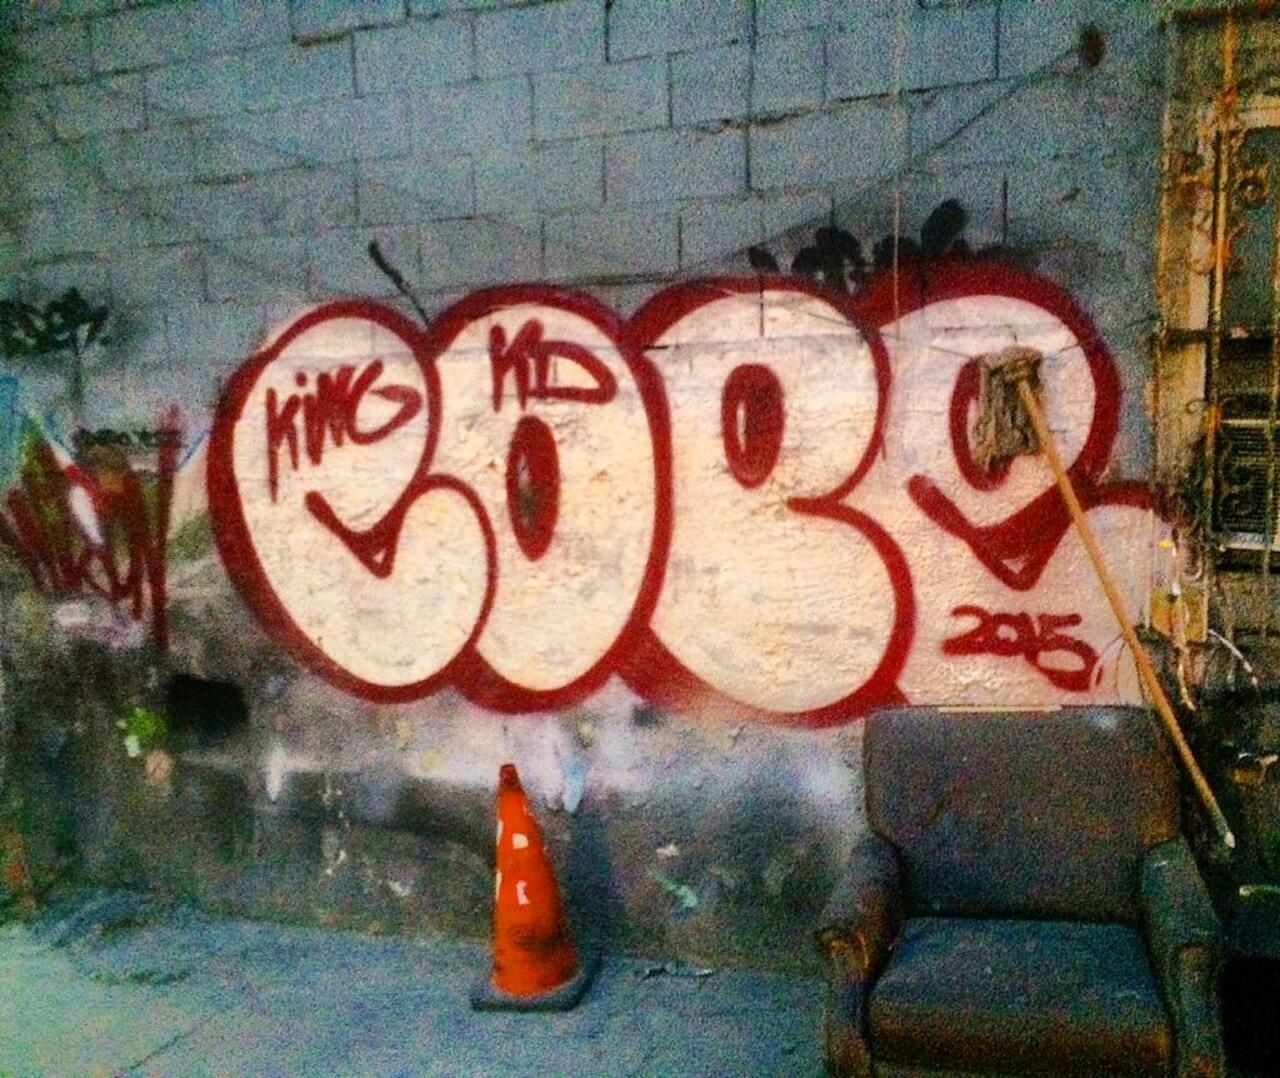 Bronx Legend @MRCOPE2  #bronx #graffiti #streetart #nyc #nikon #urban #art #legend #cope2 http://t.co/QpkxFUiuLG